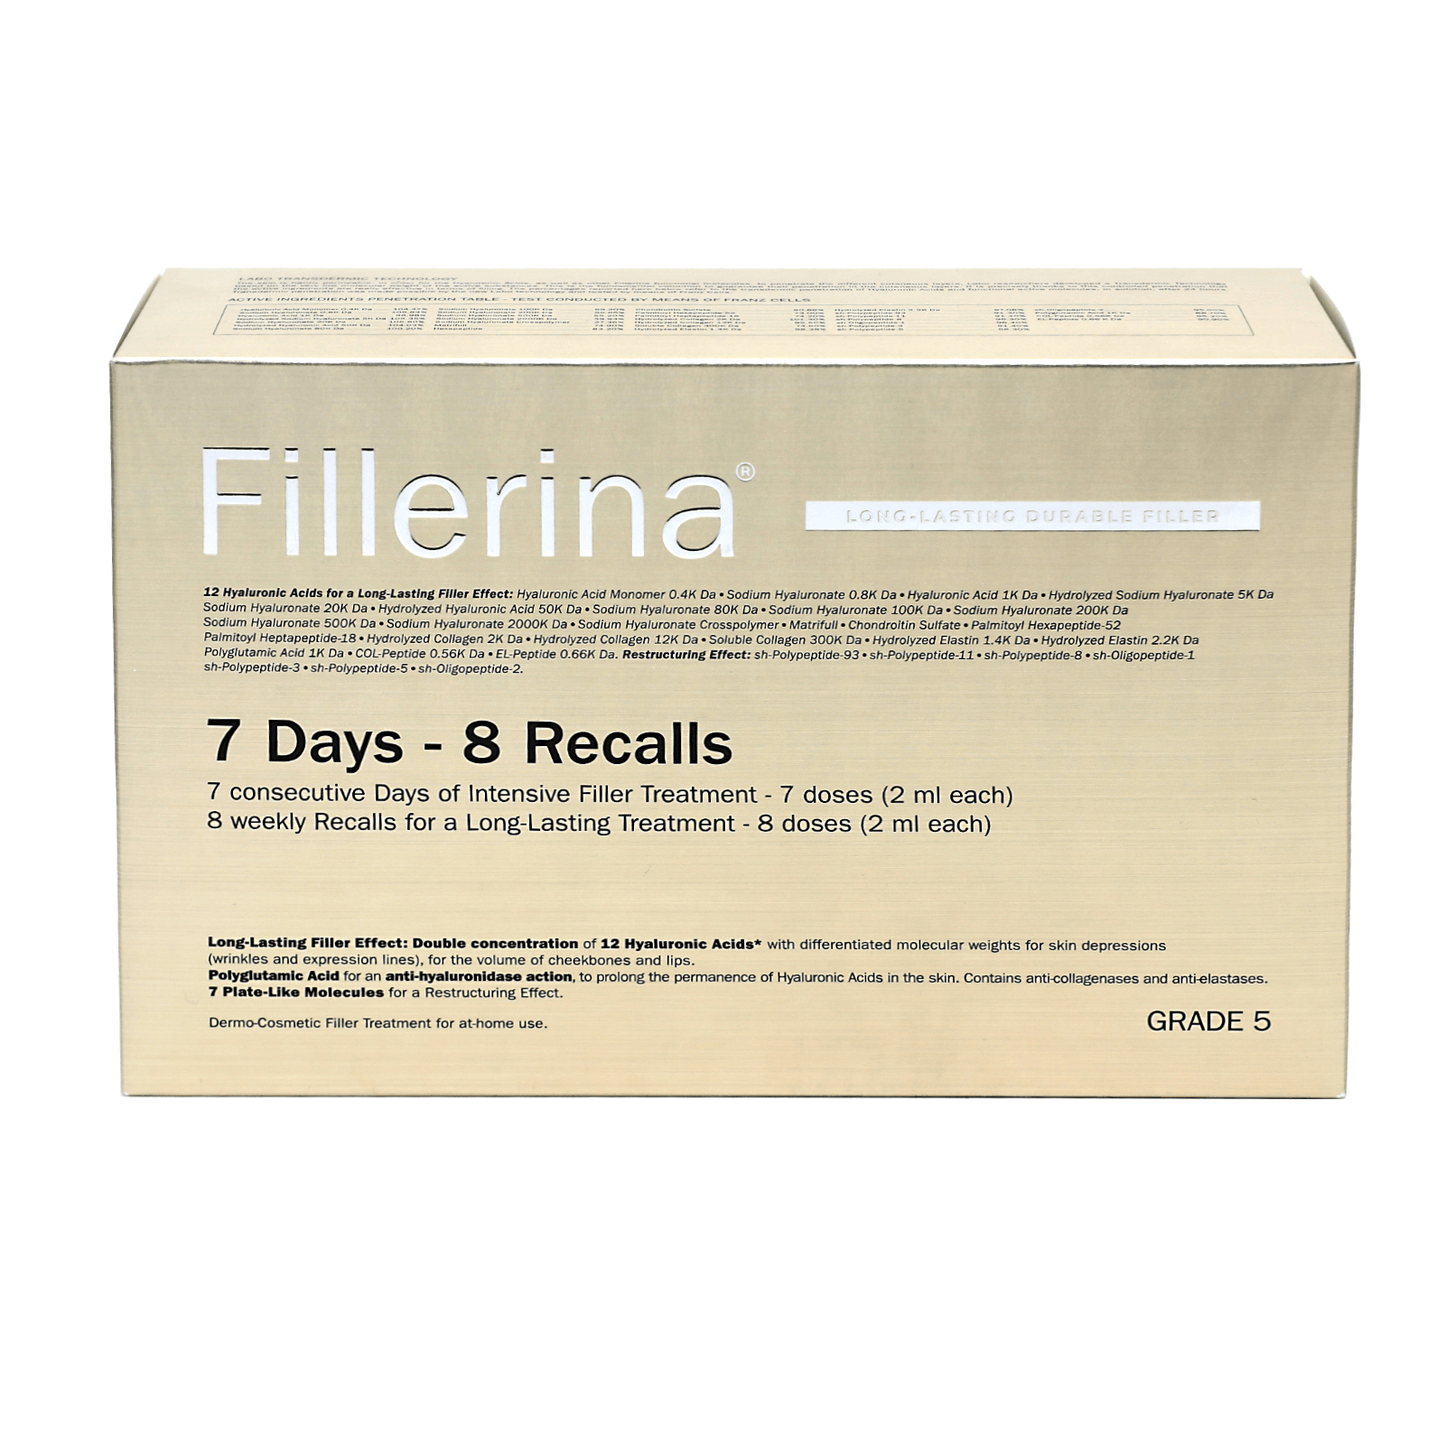 Fillerina Long Lasting Intensive Filler Treatment Grade 5